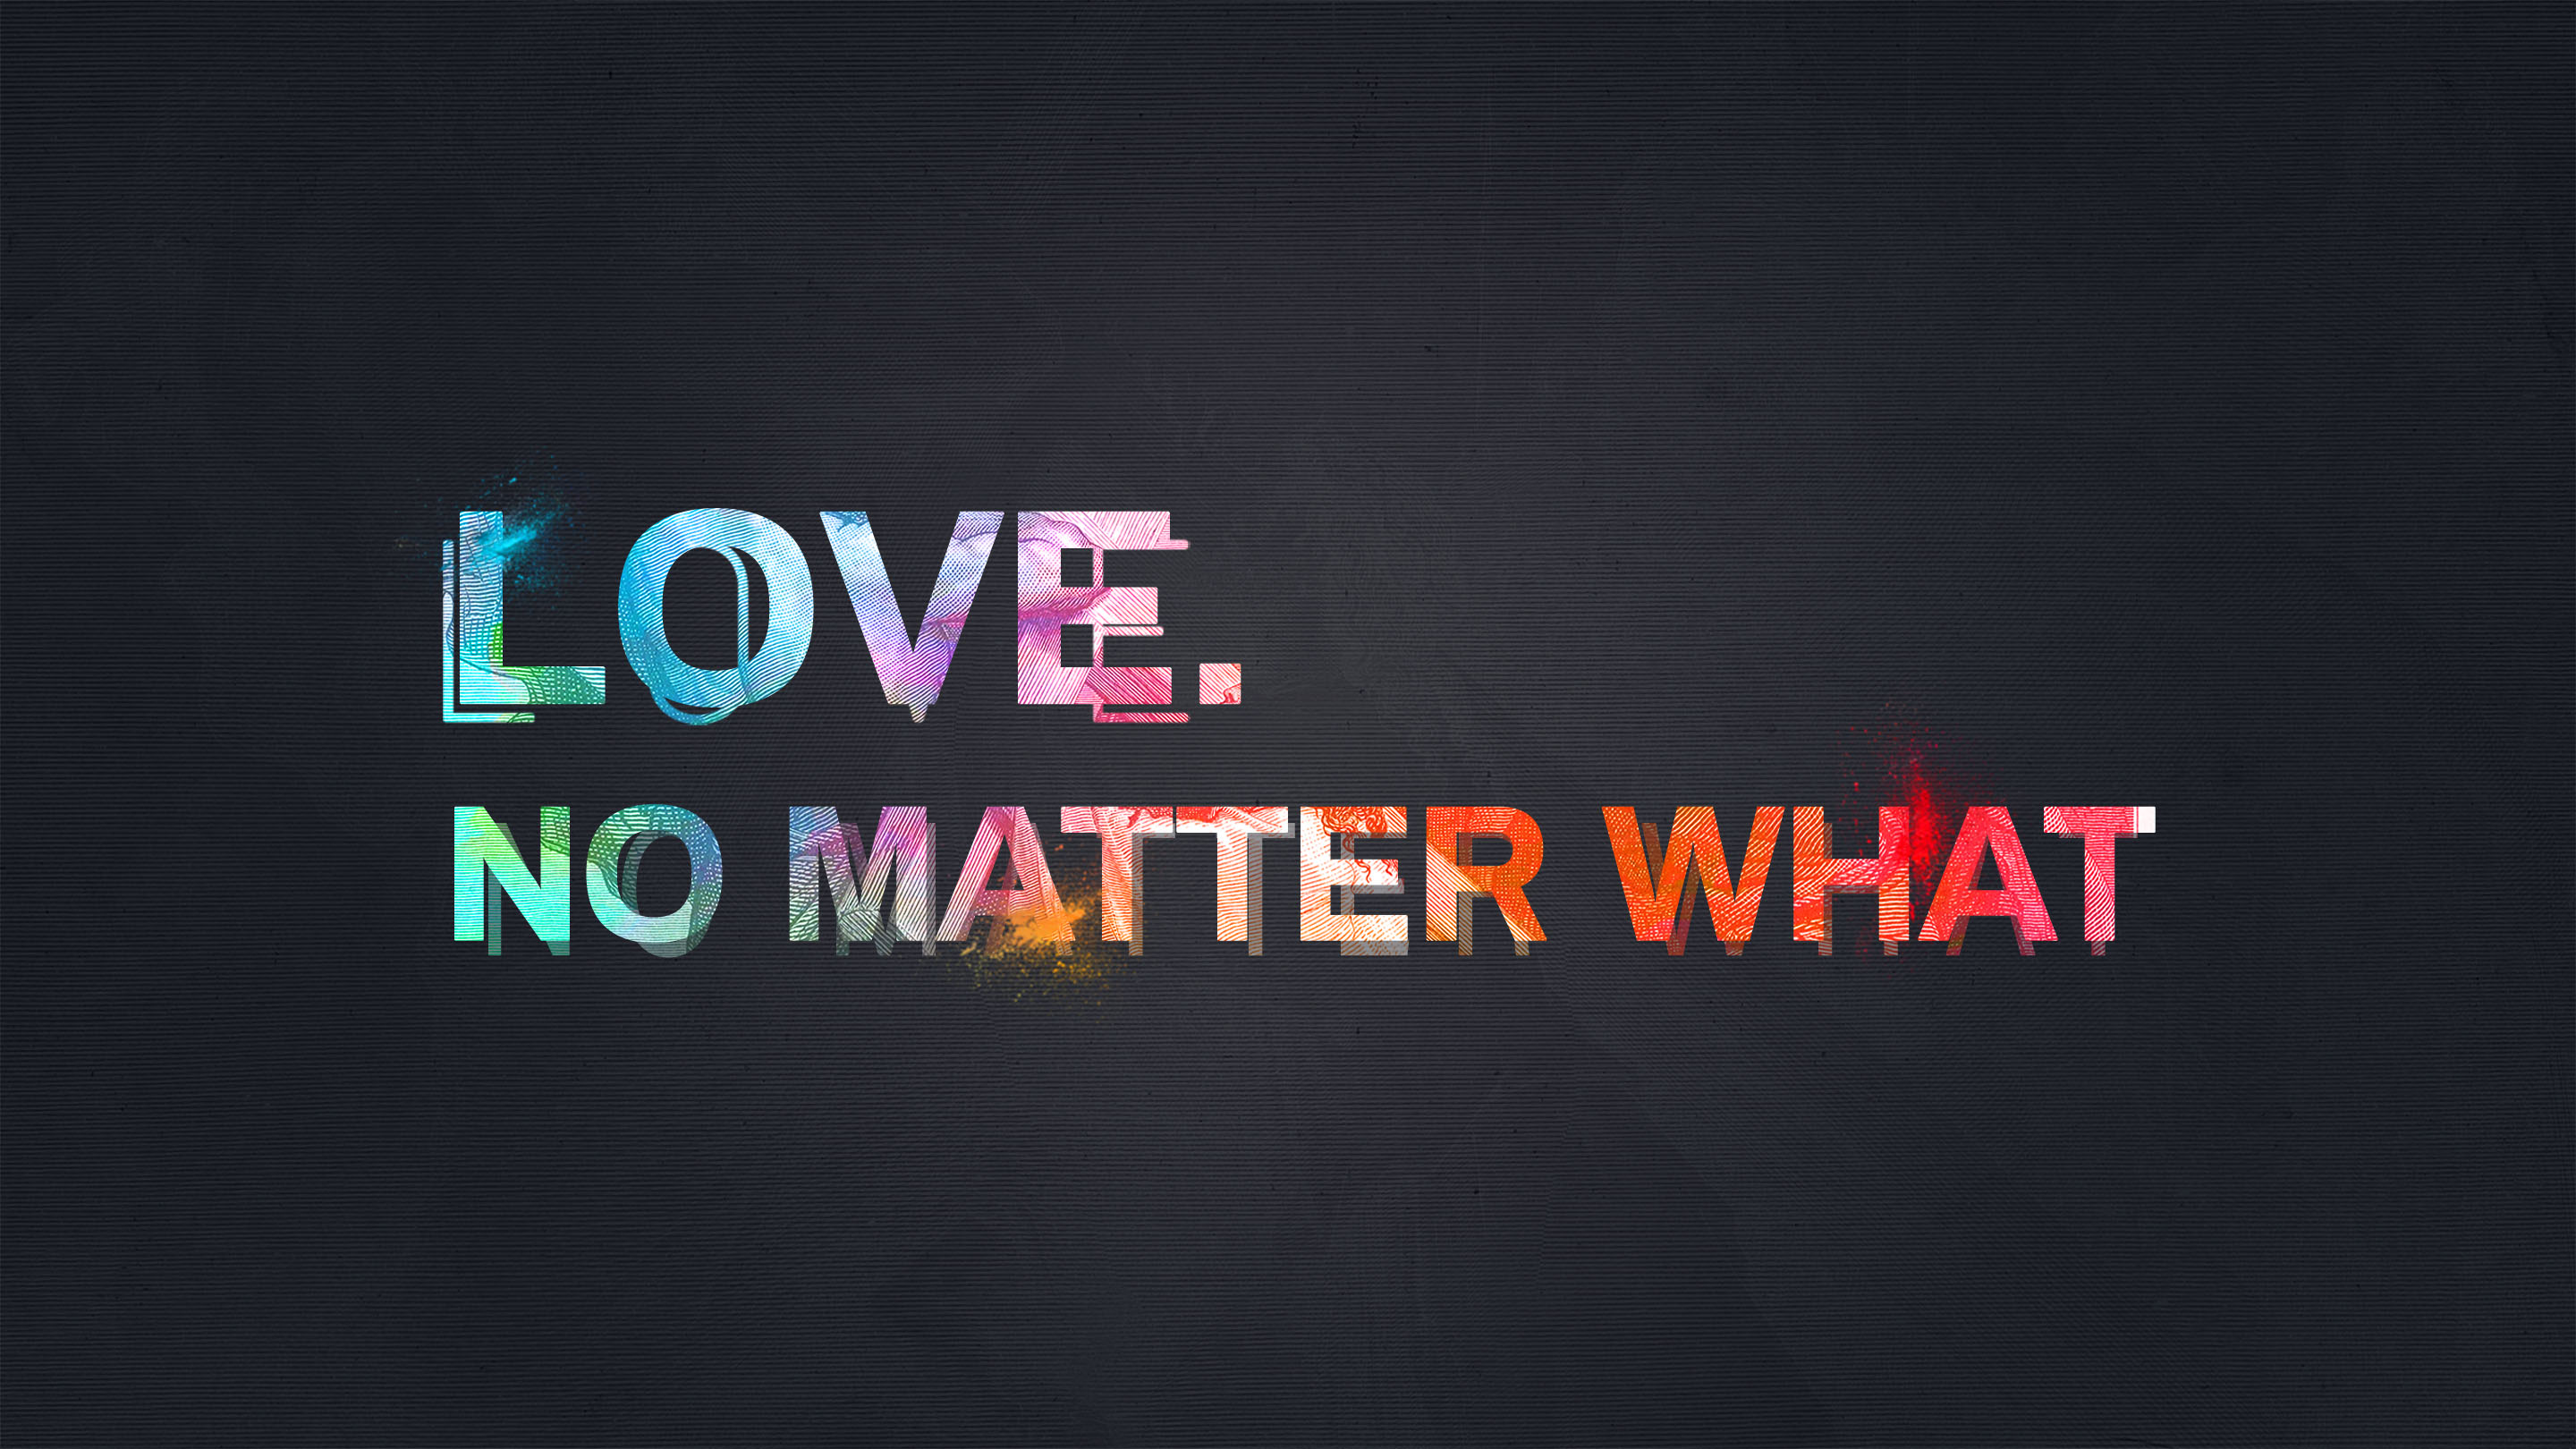 LOVE. NO MATTER WHAT